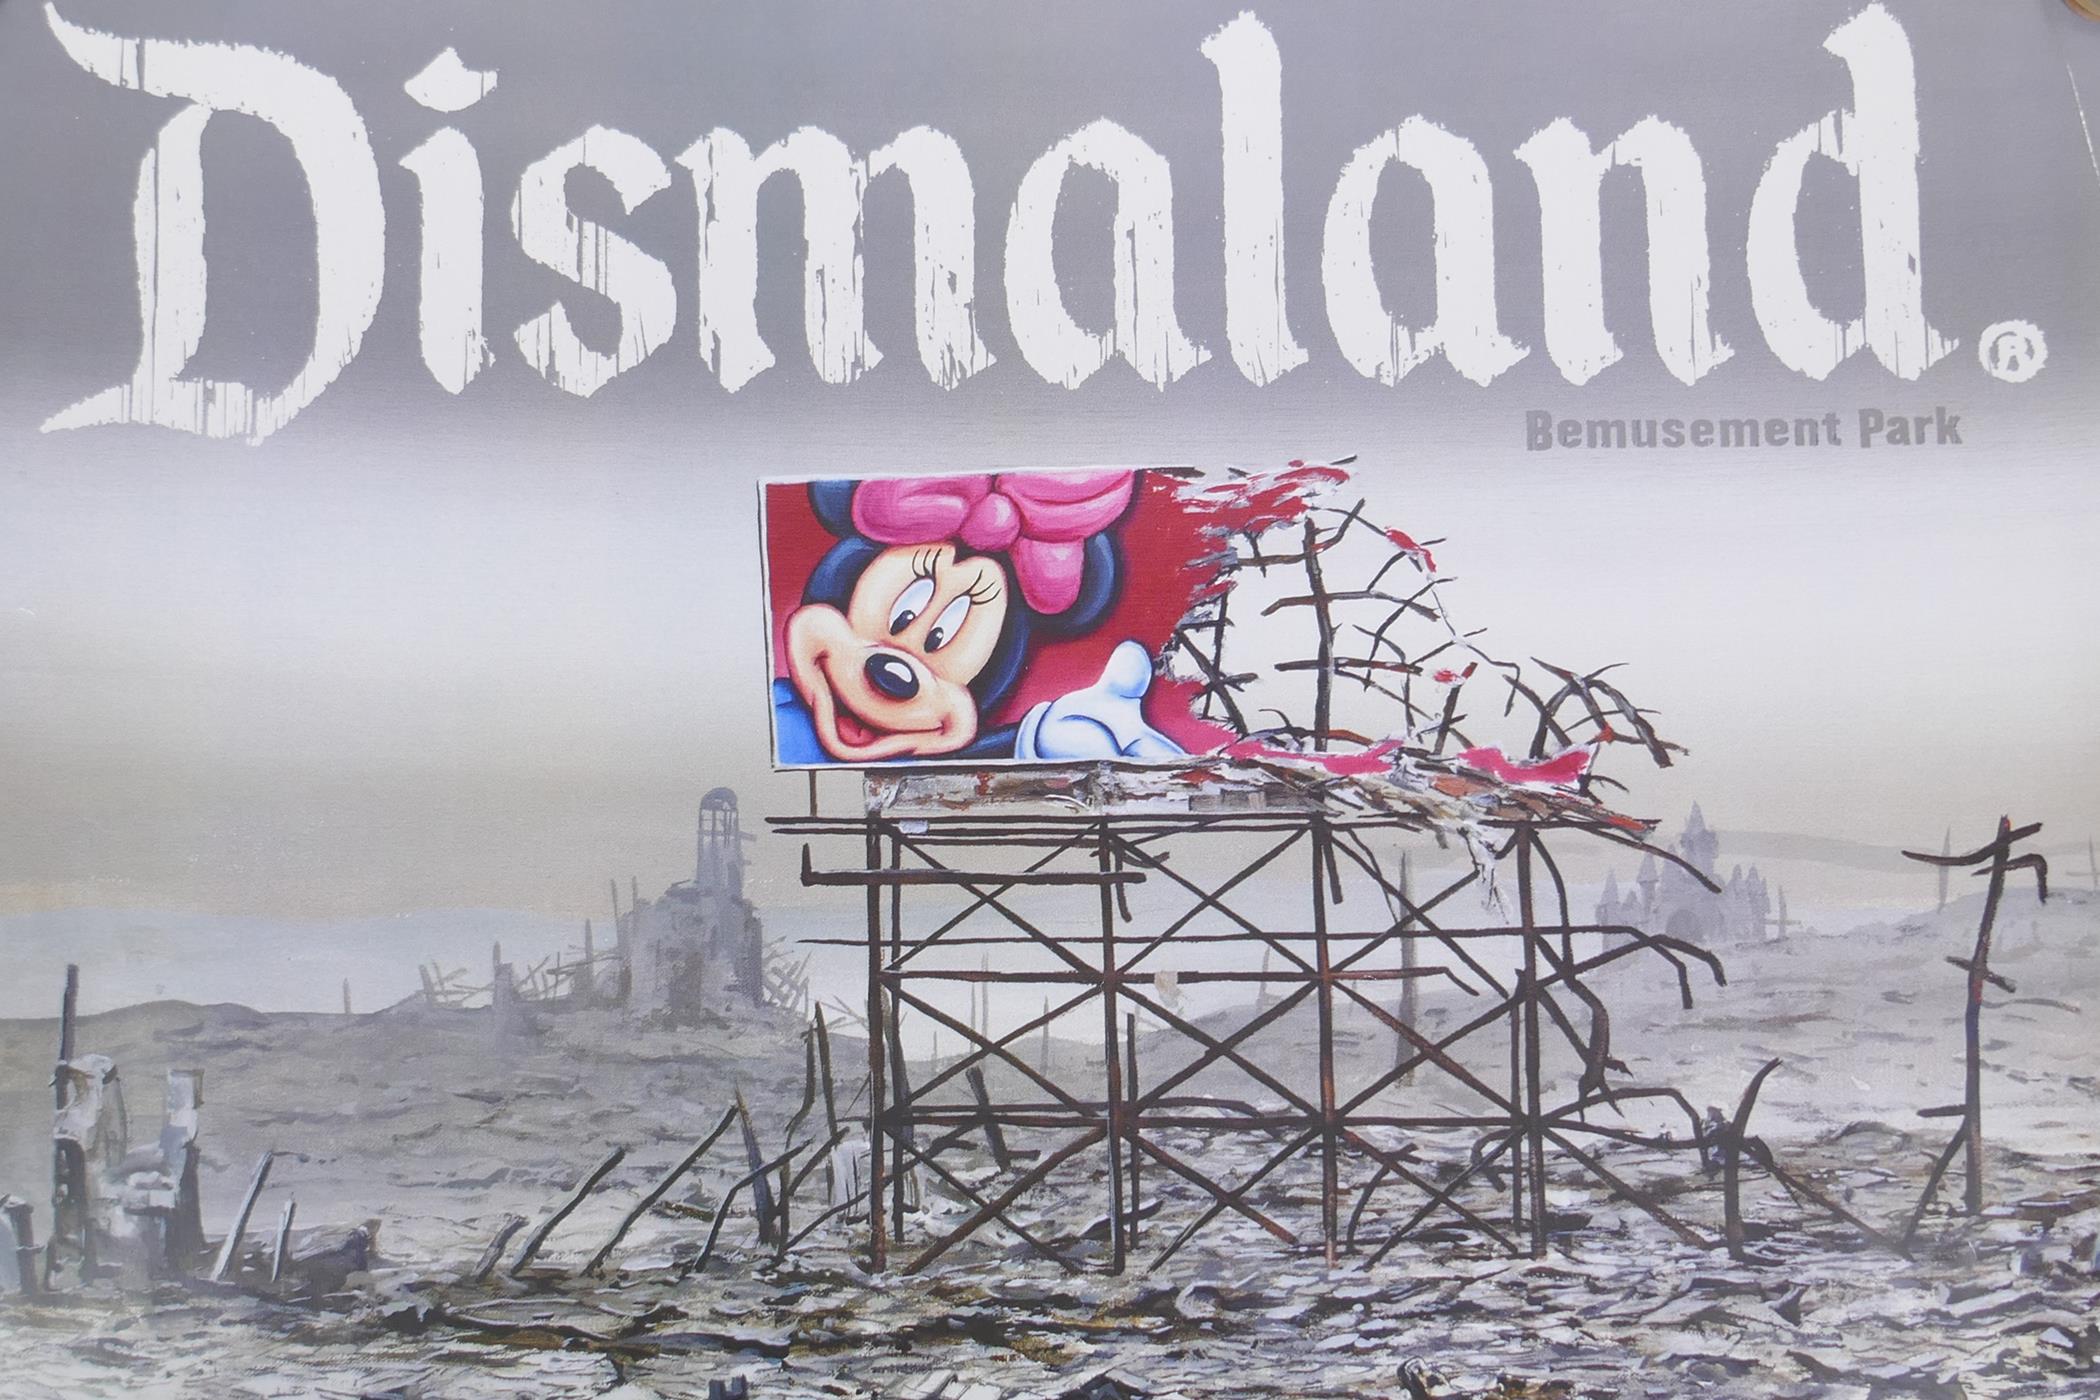 Jeff Gillette, 'Dismaland Bemusement Park' poster, creased corner, 23½" x 16½"